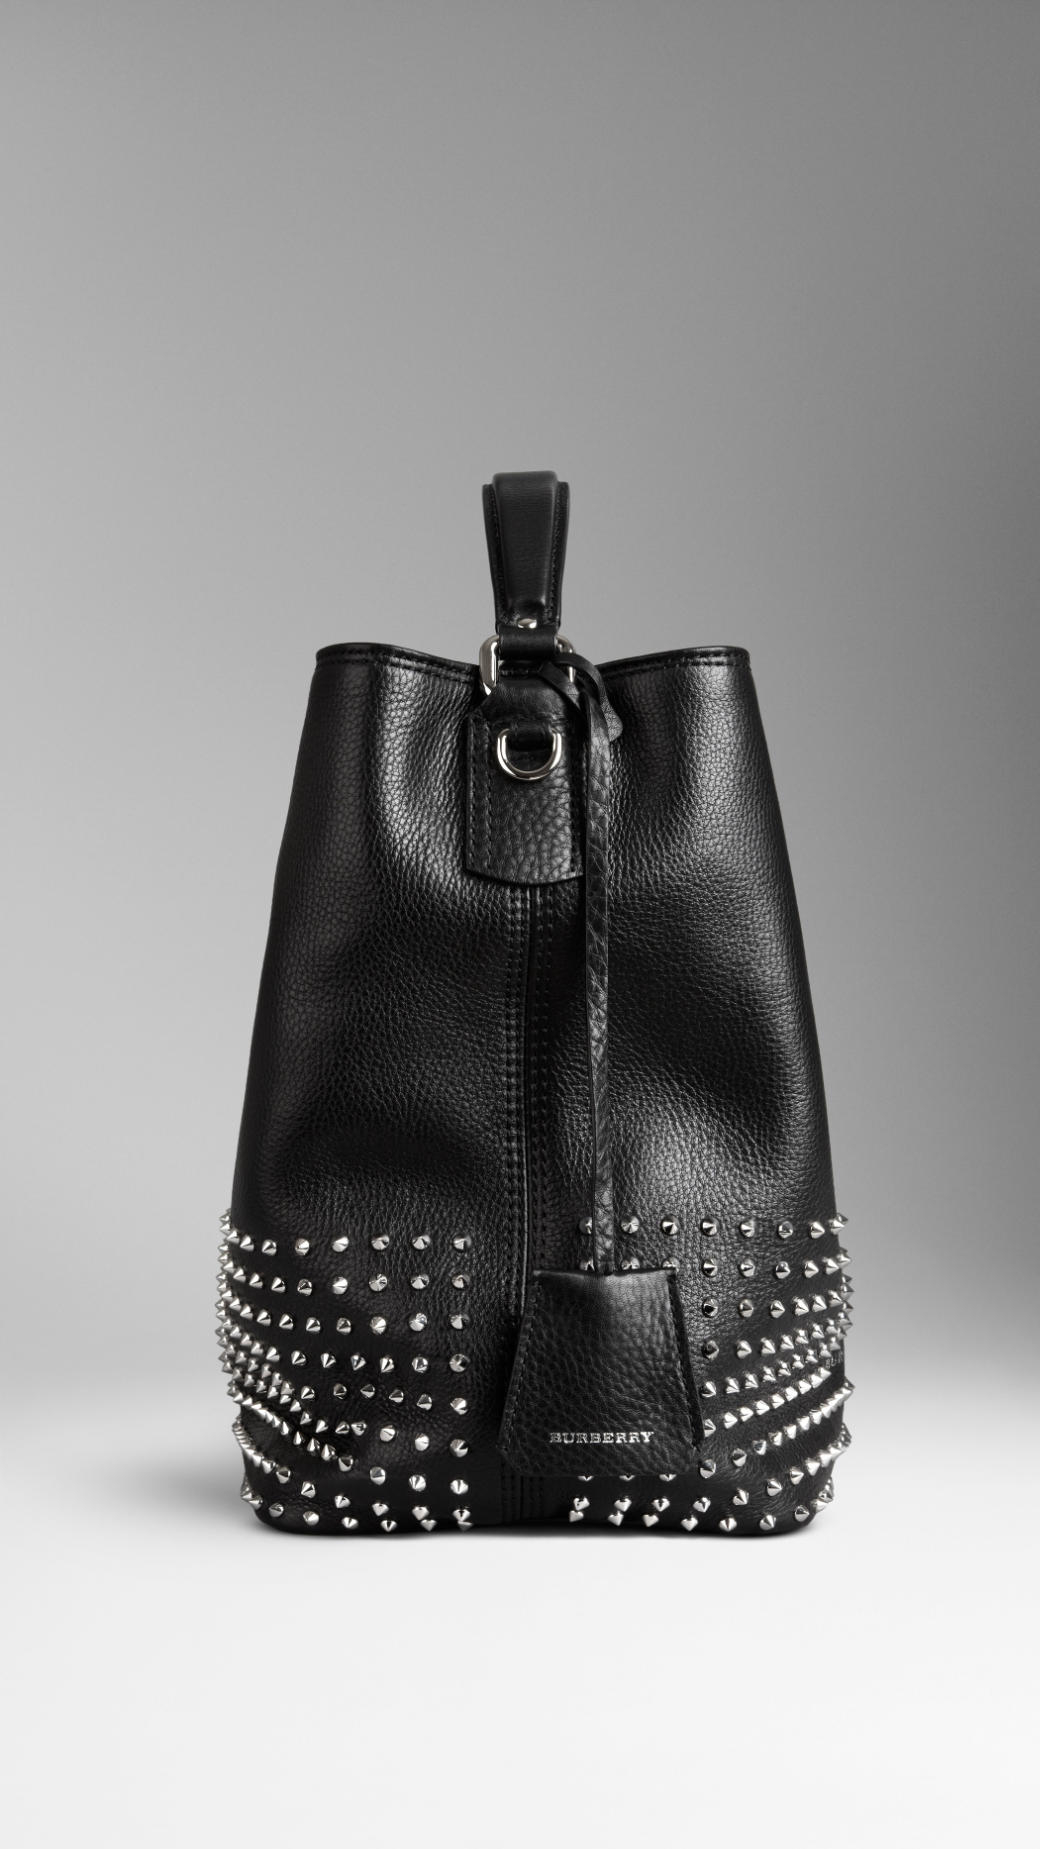 Burberry Medium Studded Leather Hobo Bag in Black - Lyst